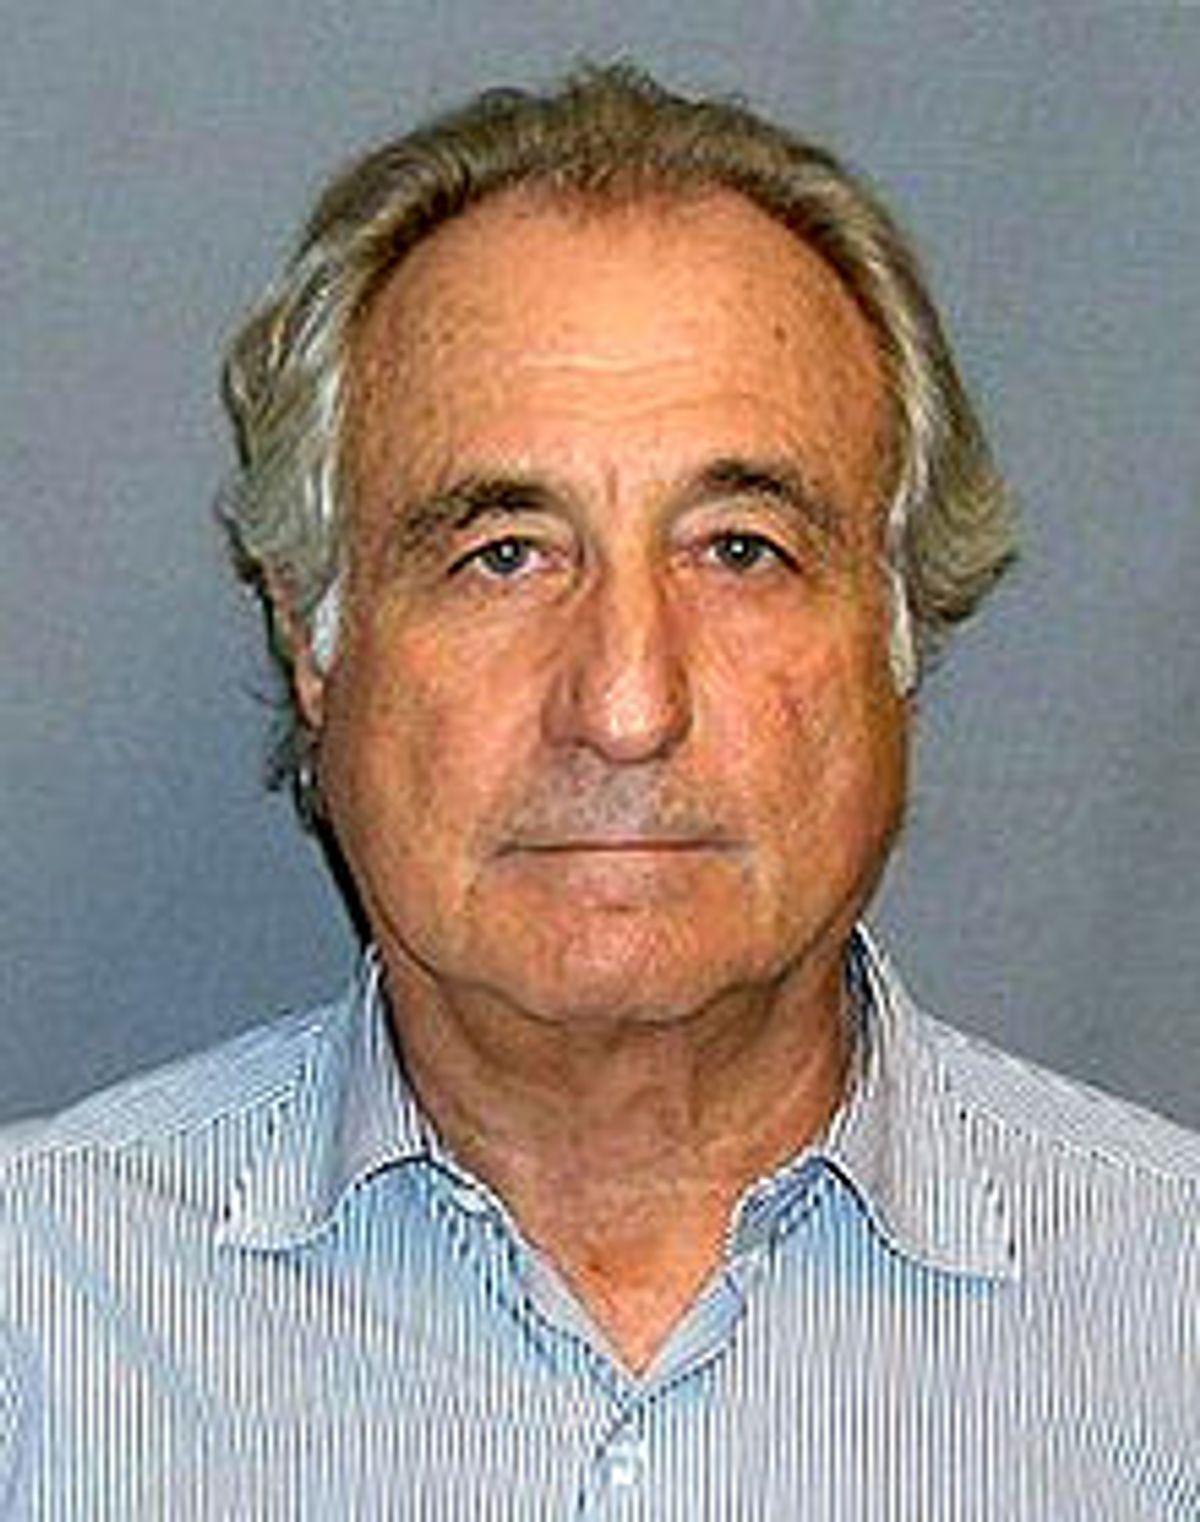  Bernie Madoff    (via Wikipedia)